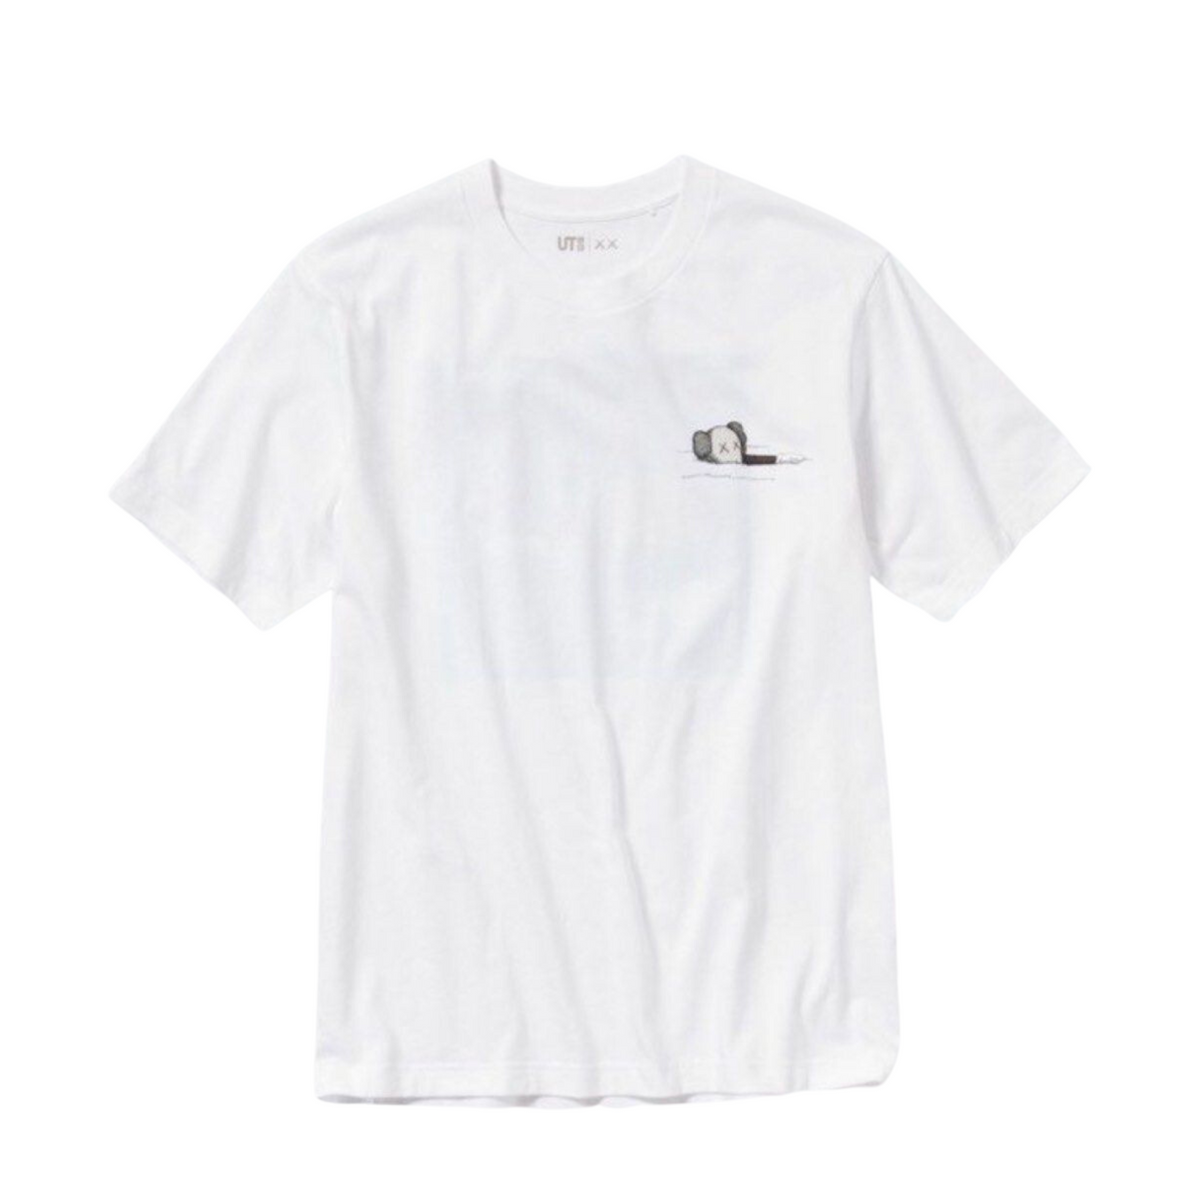 KAWS x Uniqlo UT Short Sleeve Artbook Cover T-shirt “White” - street-bill.dk